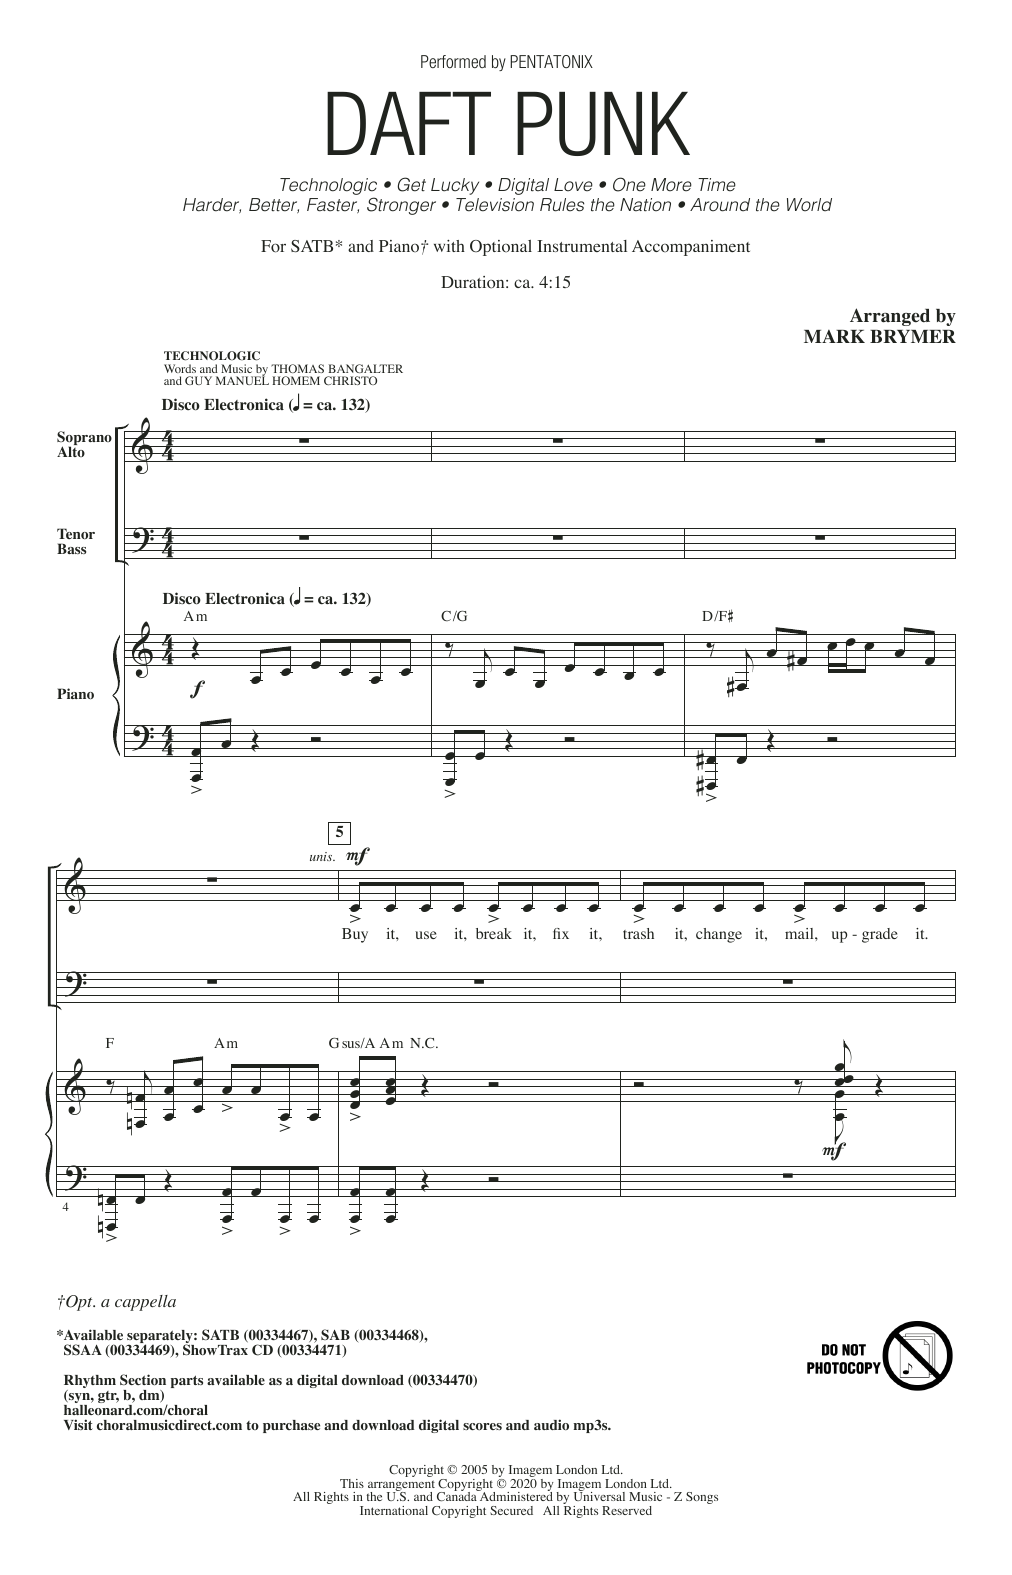 Pentatonix Daft Punk (Choral Medley) (arr. Mark Brymer) Sheet Music Notes & Chords for SATB Choir - Download or Print PDF